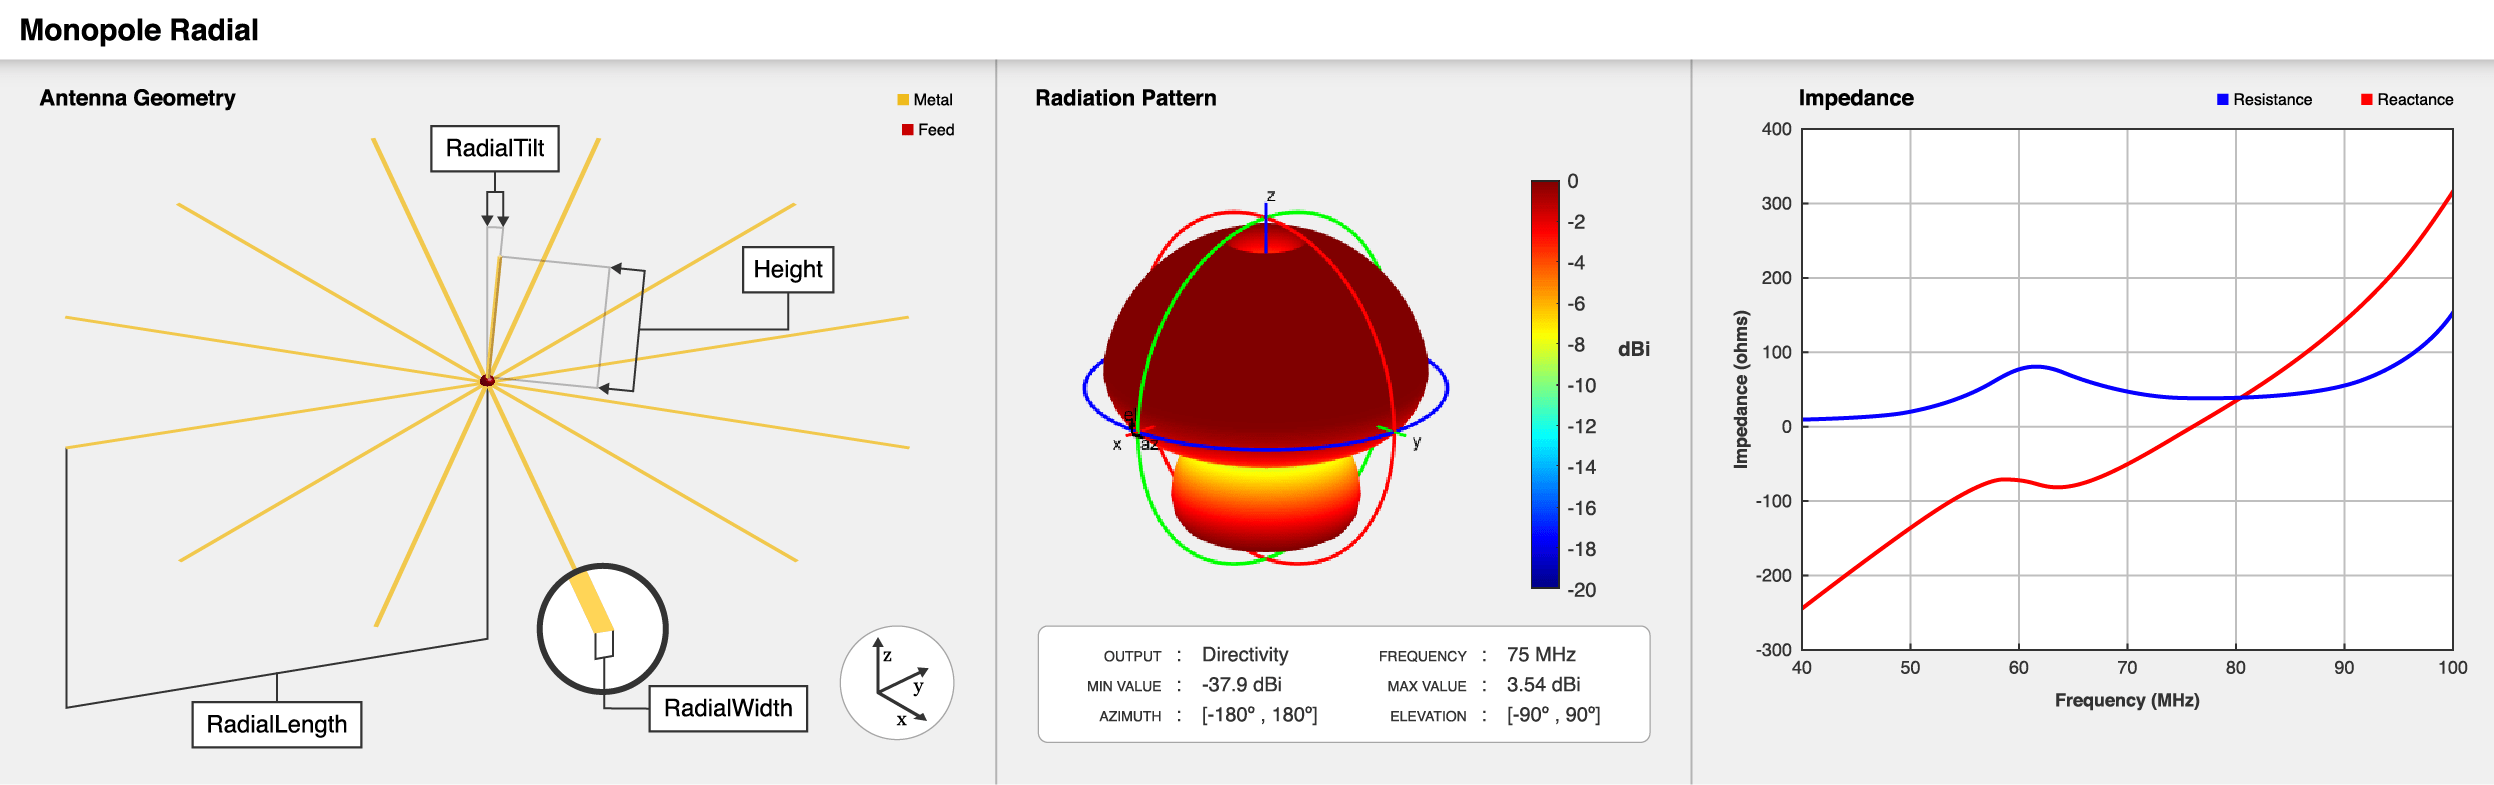 Radial monopole antenna geometry, default radiation pattern, and impedance plot.